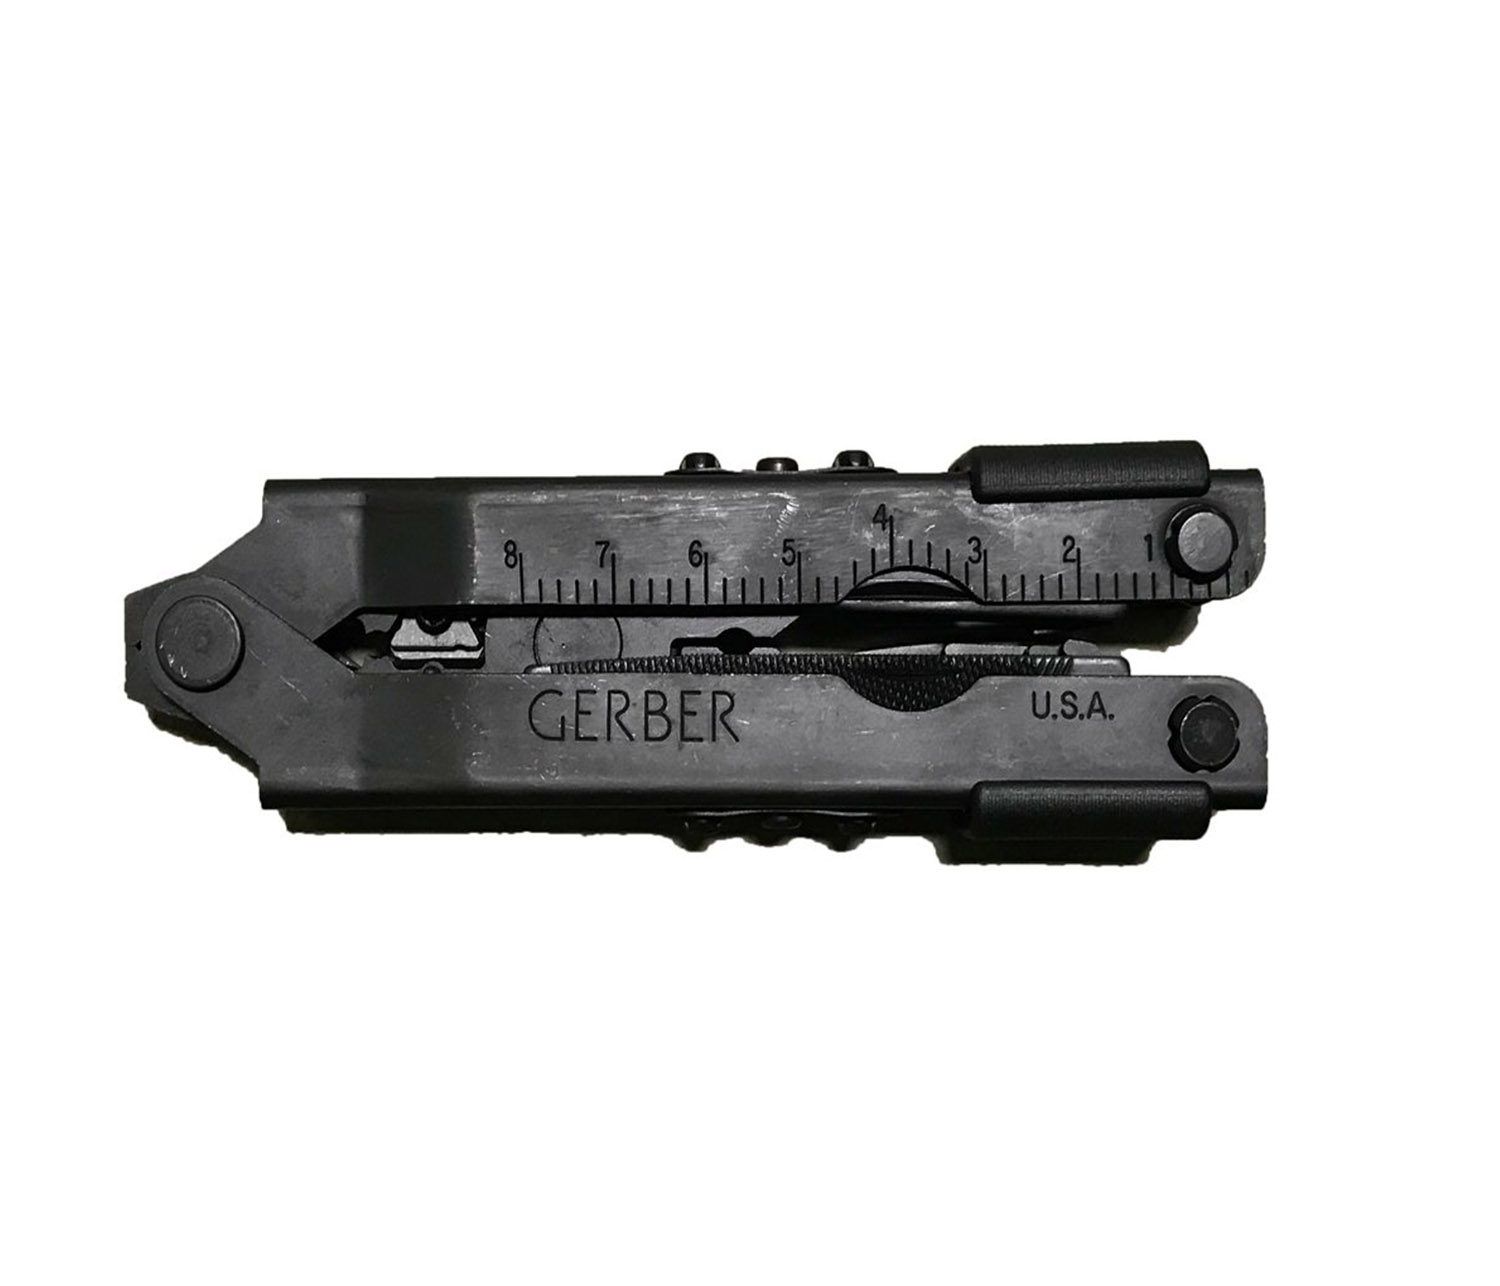 RAE Gear, RAE Gear Sheath, Gerber MP600 Basic, Gerber Multi-tool, Multi-Tool, Sheath, Multi-Plier 600